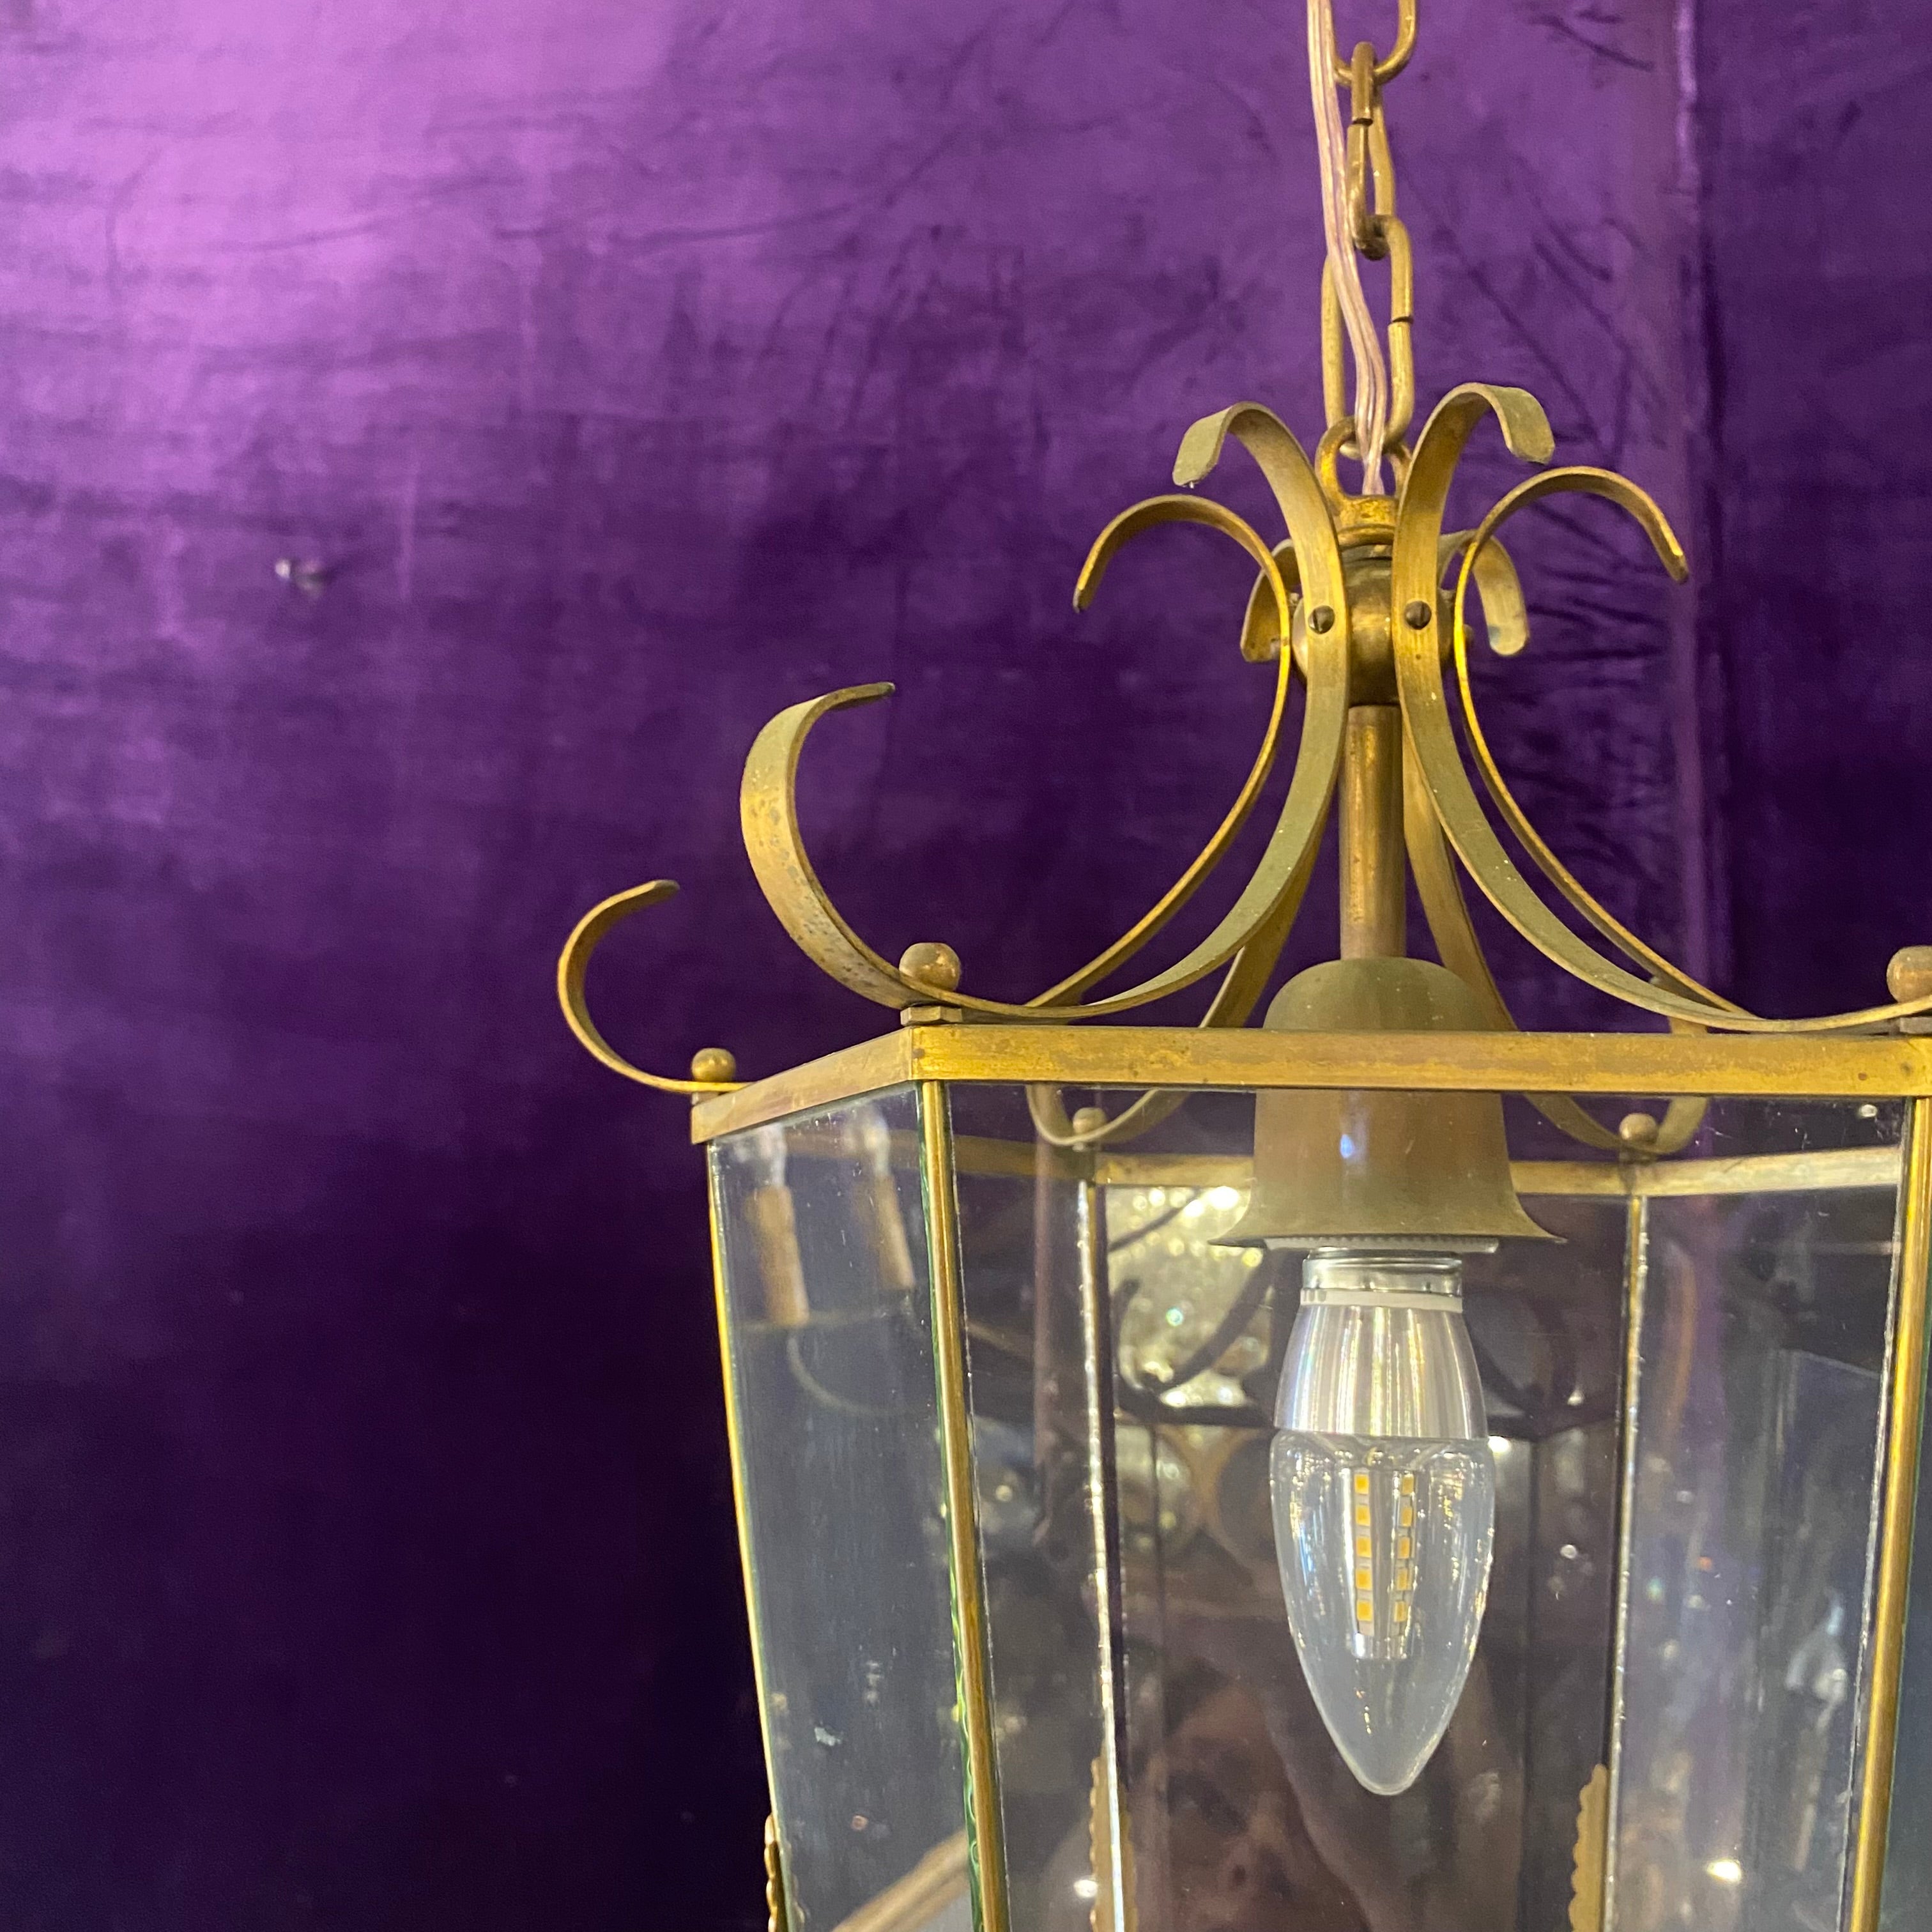 Simplistic old brass chandelier